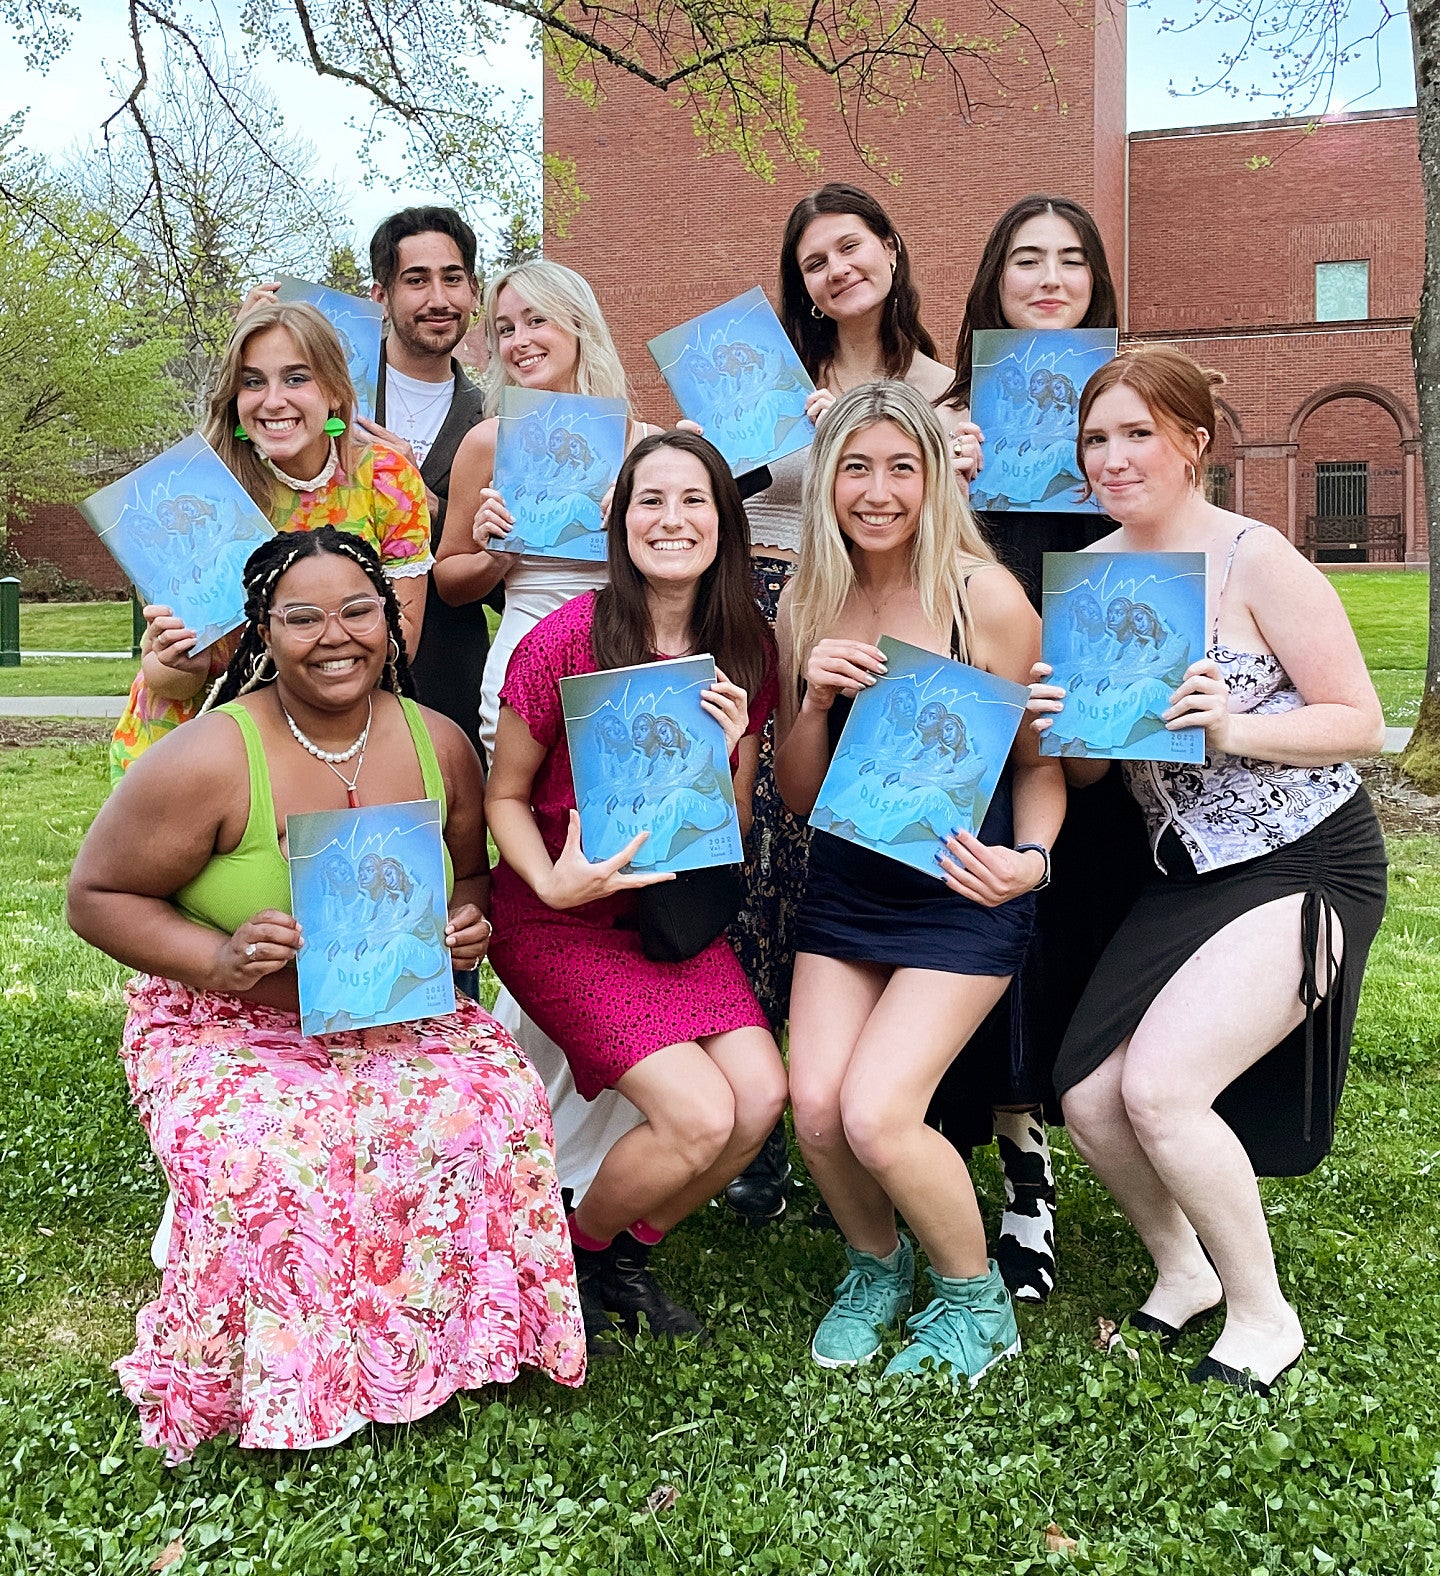 Ten students holding copies of the Align print magazine